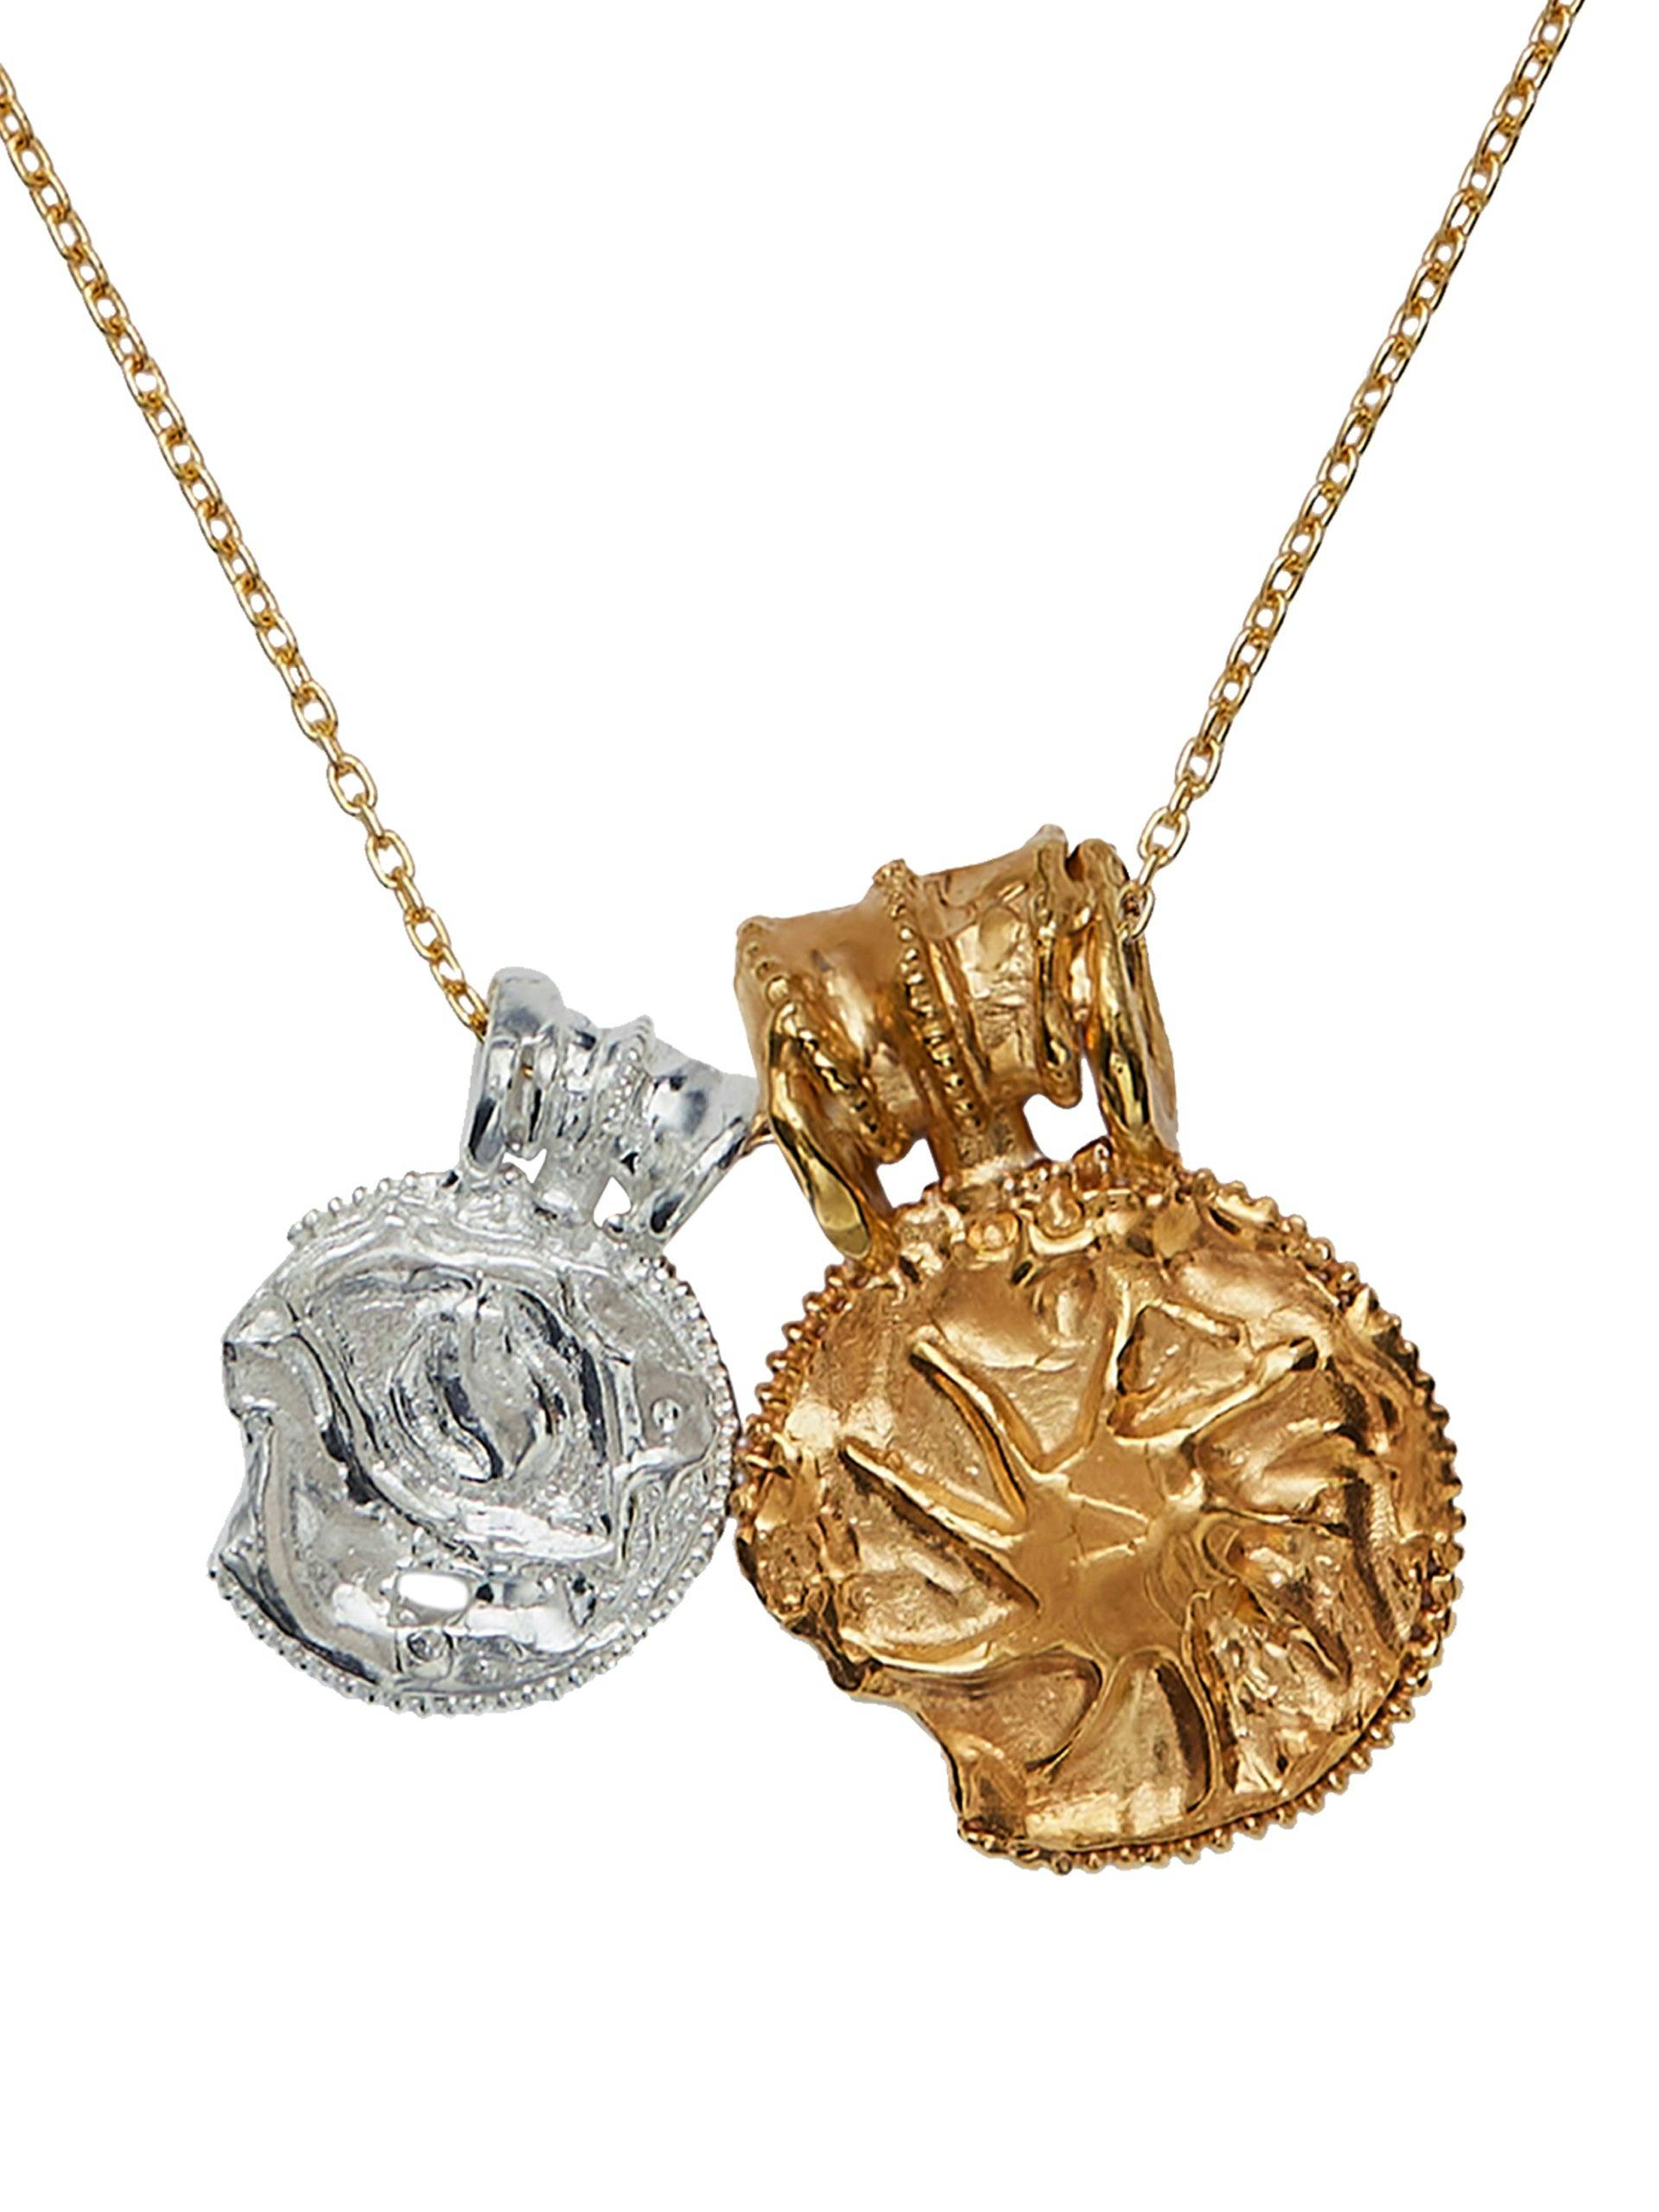 Silver and gold Illuminated Horizon necklace